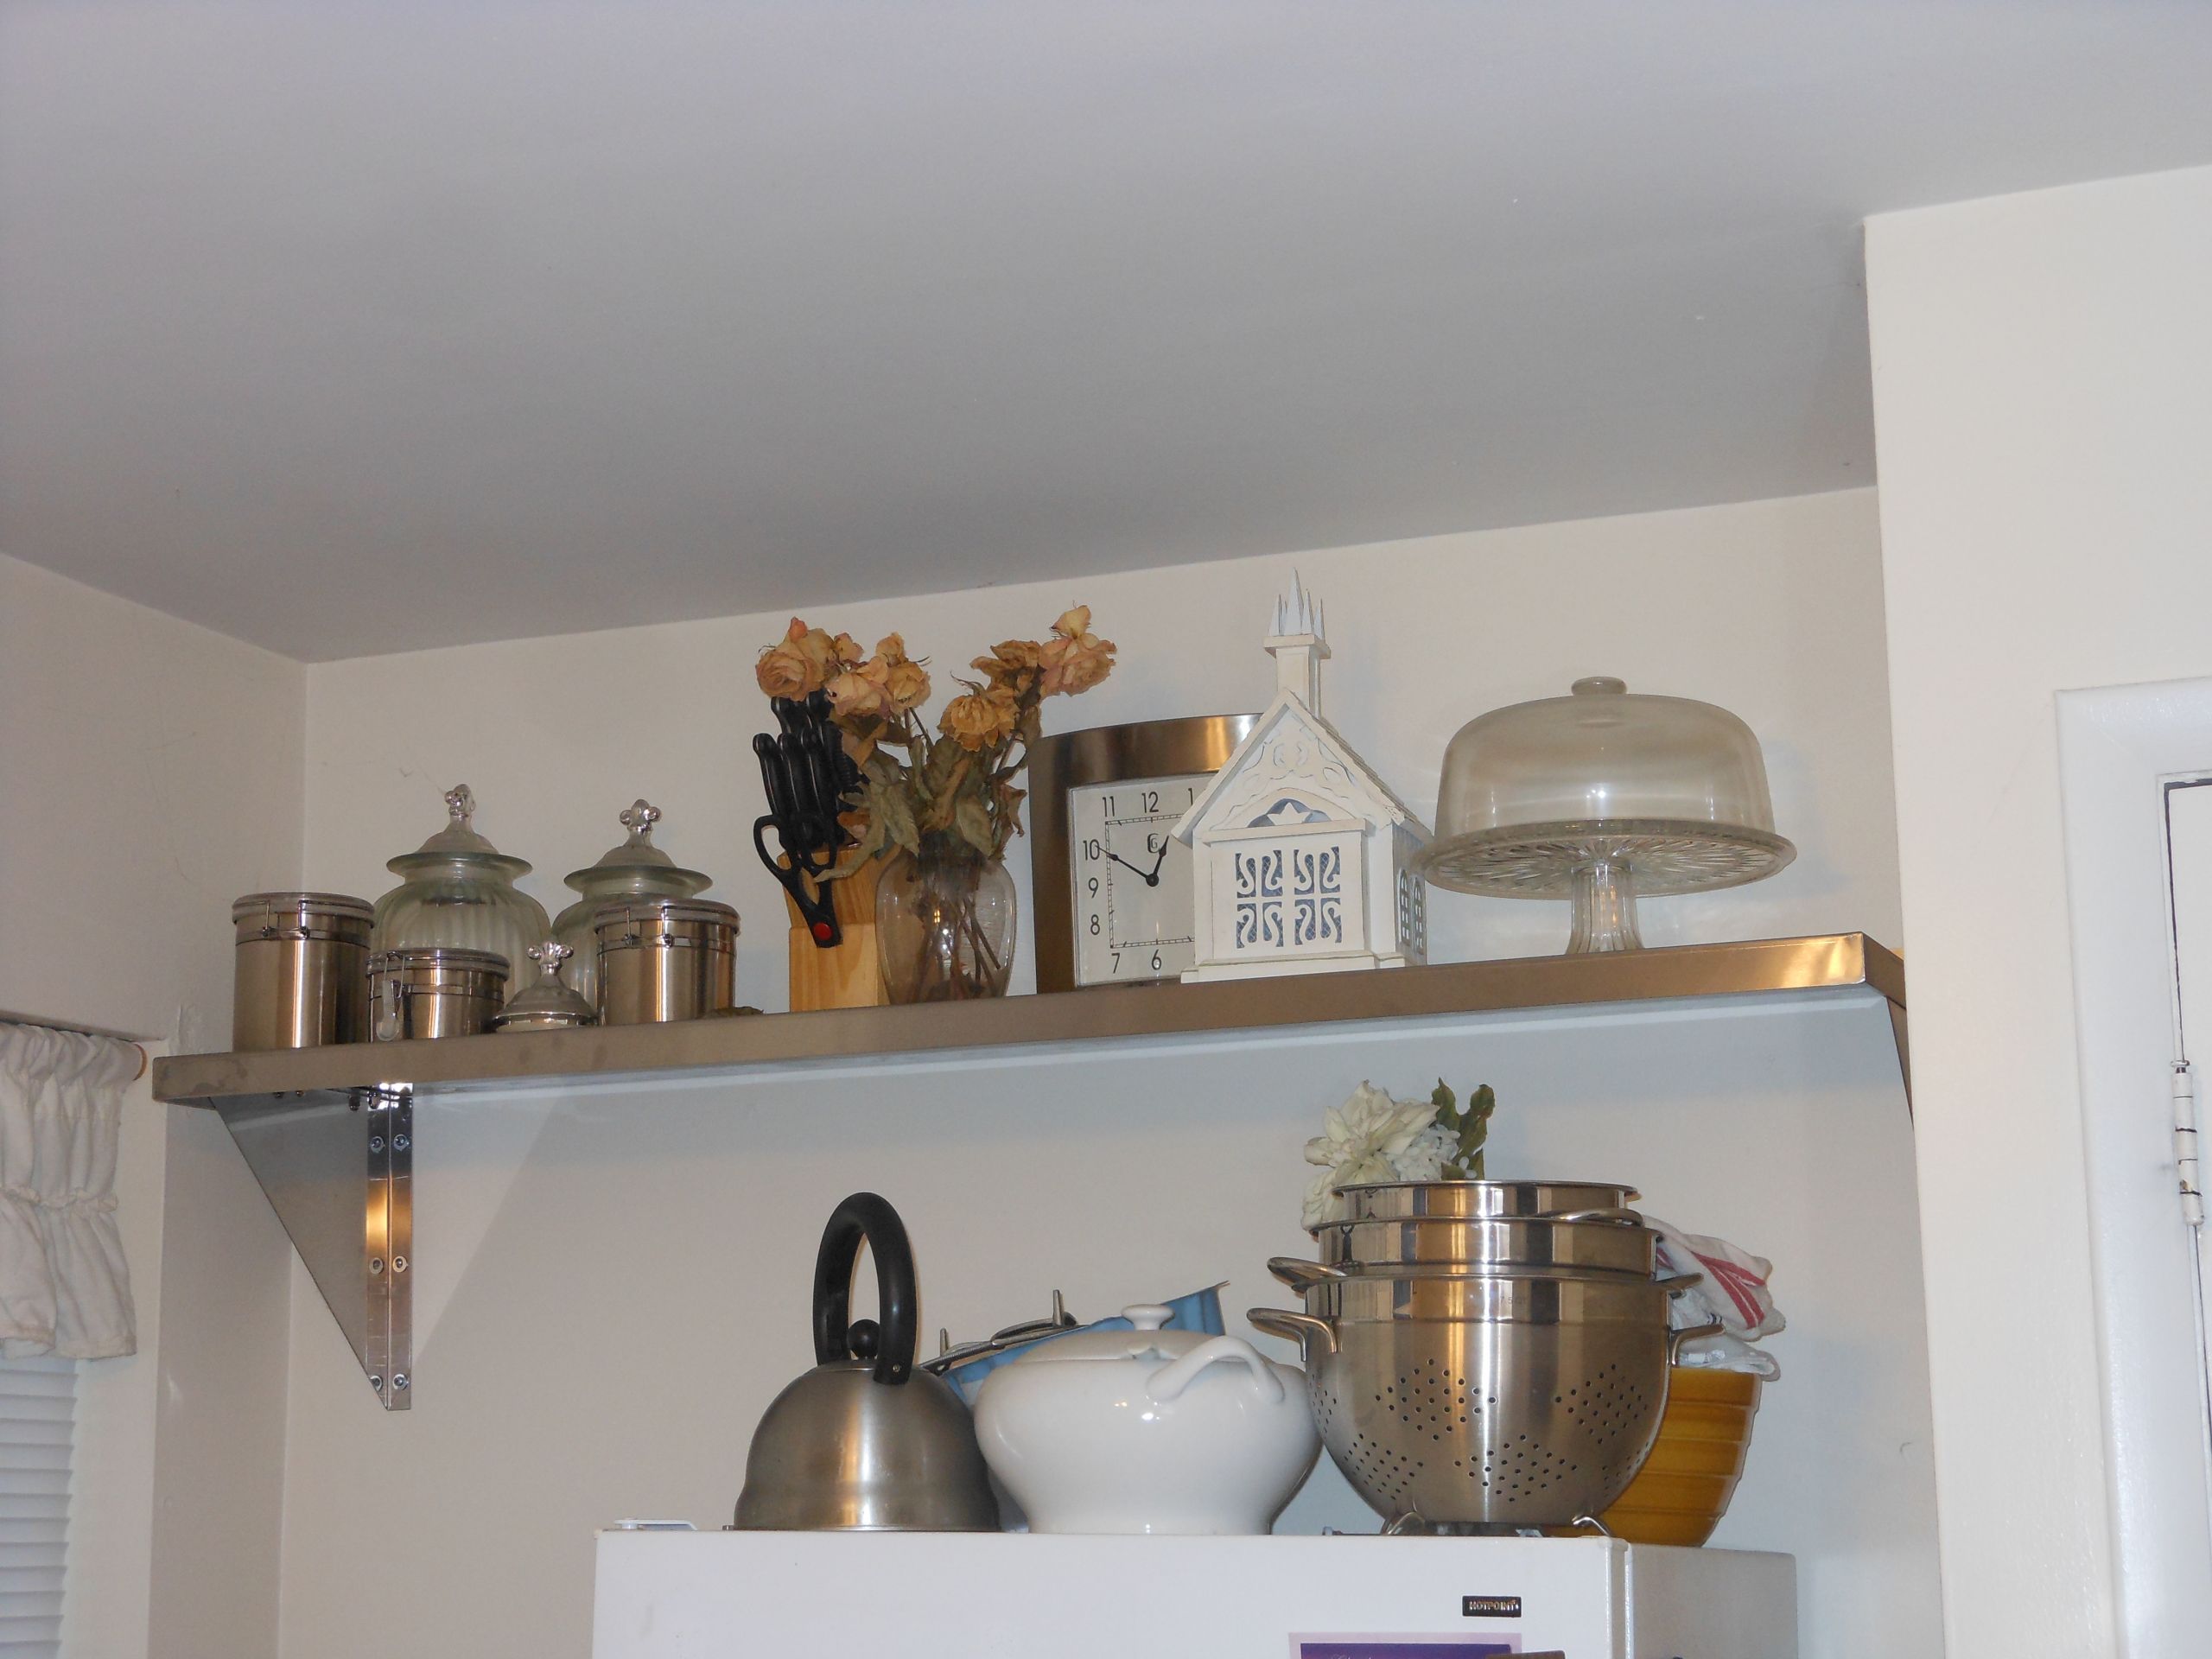 Decorative Kitchen Wall Shelves
 DIY Decorate Your Kitchen Pinterest and Stuff La s